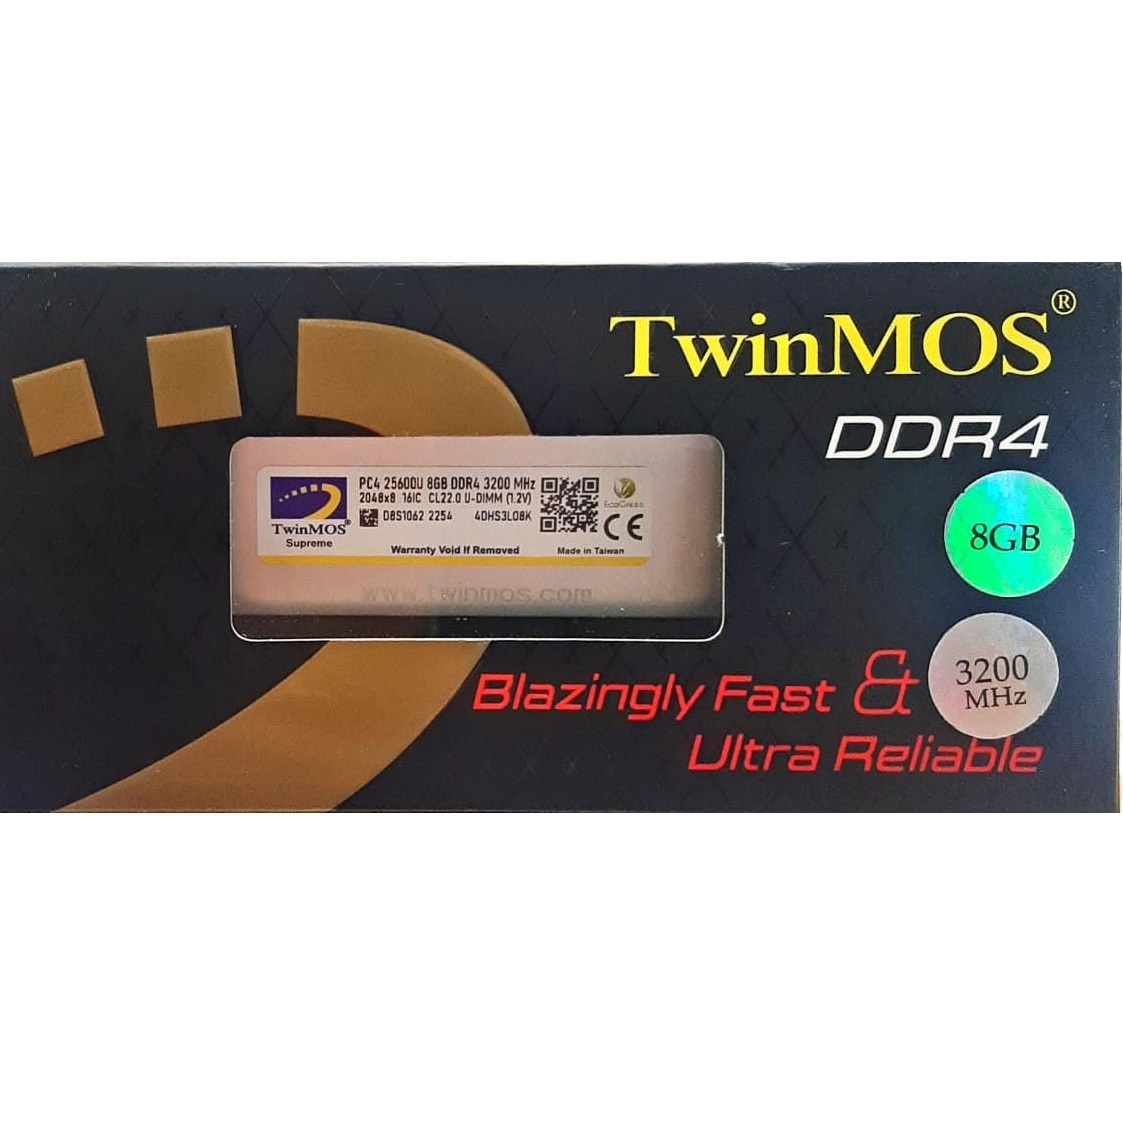 TwinMOS DDR4 8GB 3200MHz | رم كامپيوتر-